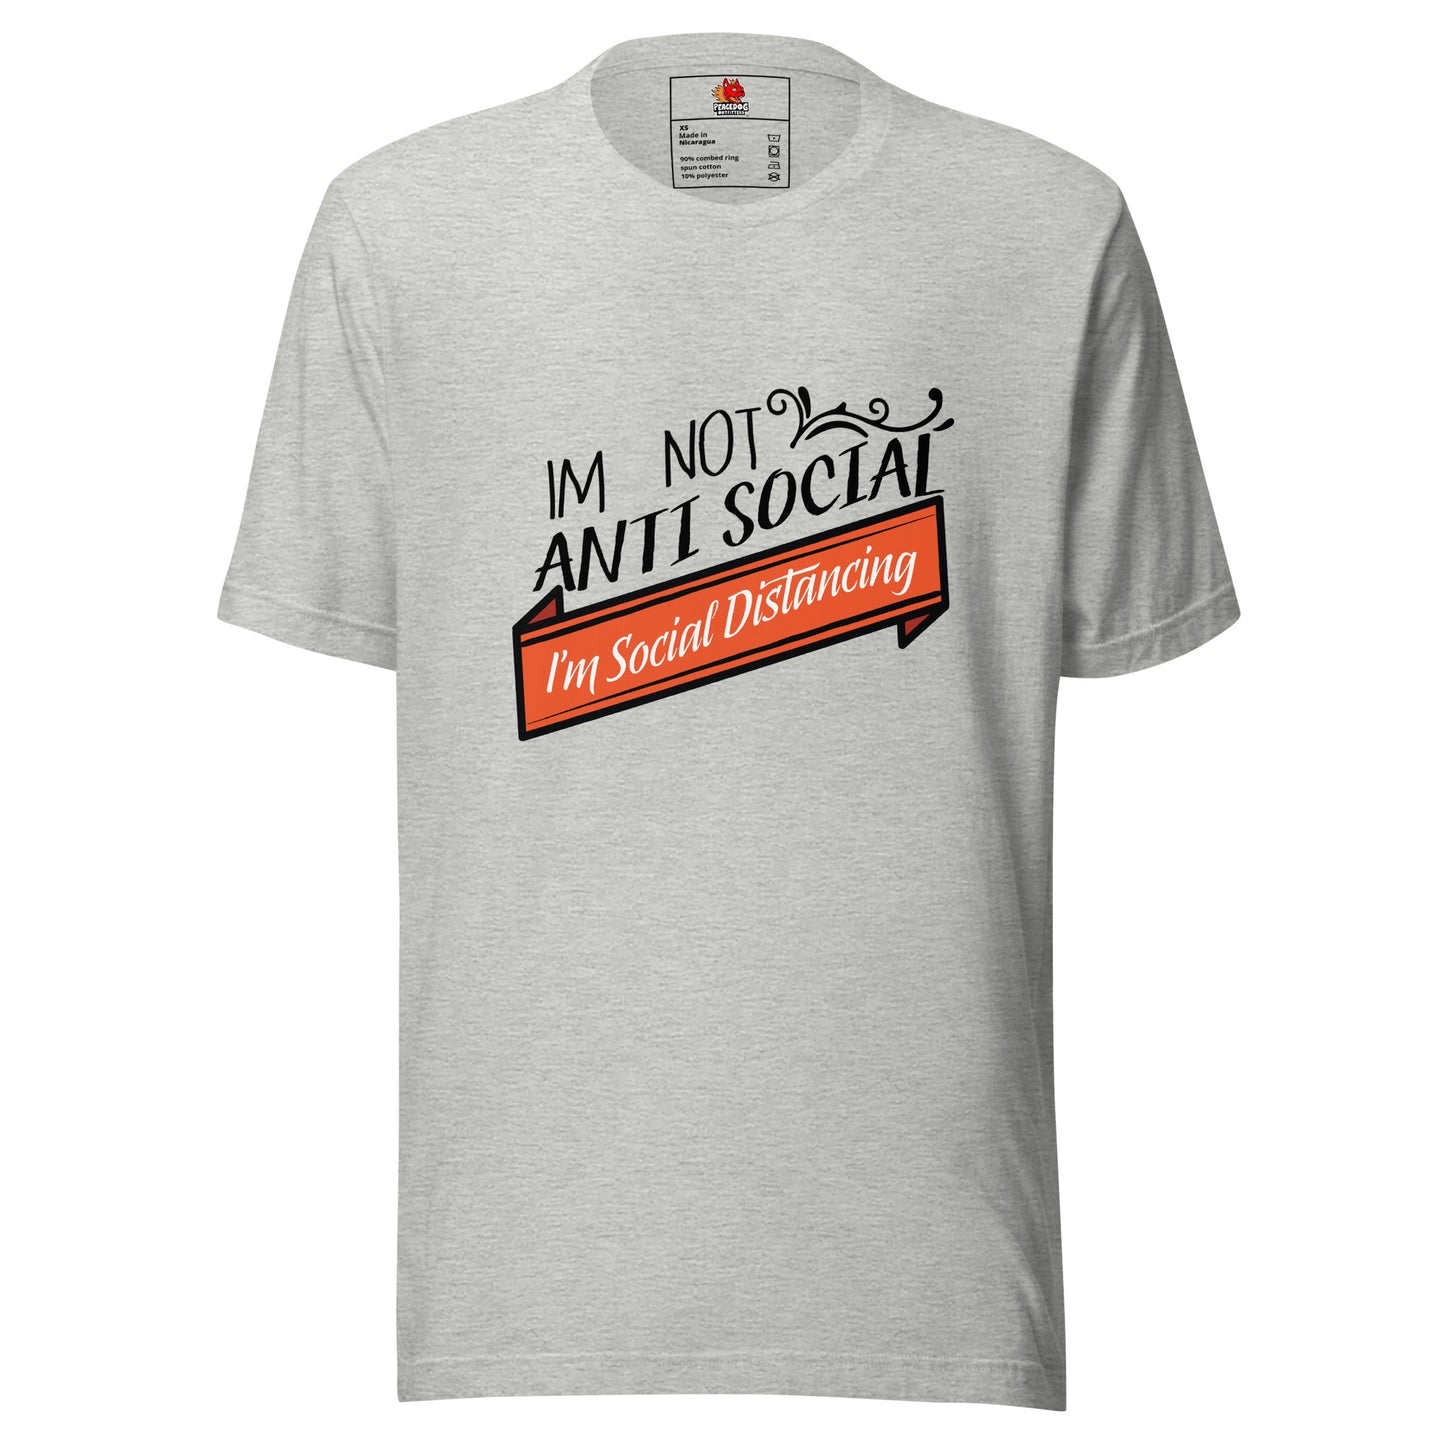 I'm Not Anti-Social, I'm Social Distancing T-shirt